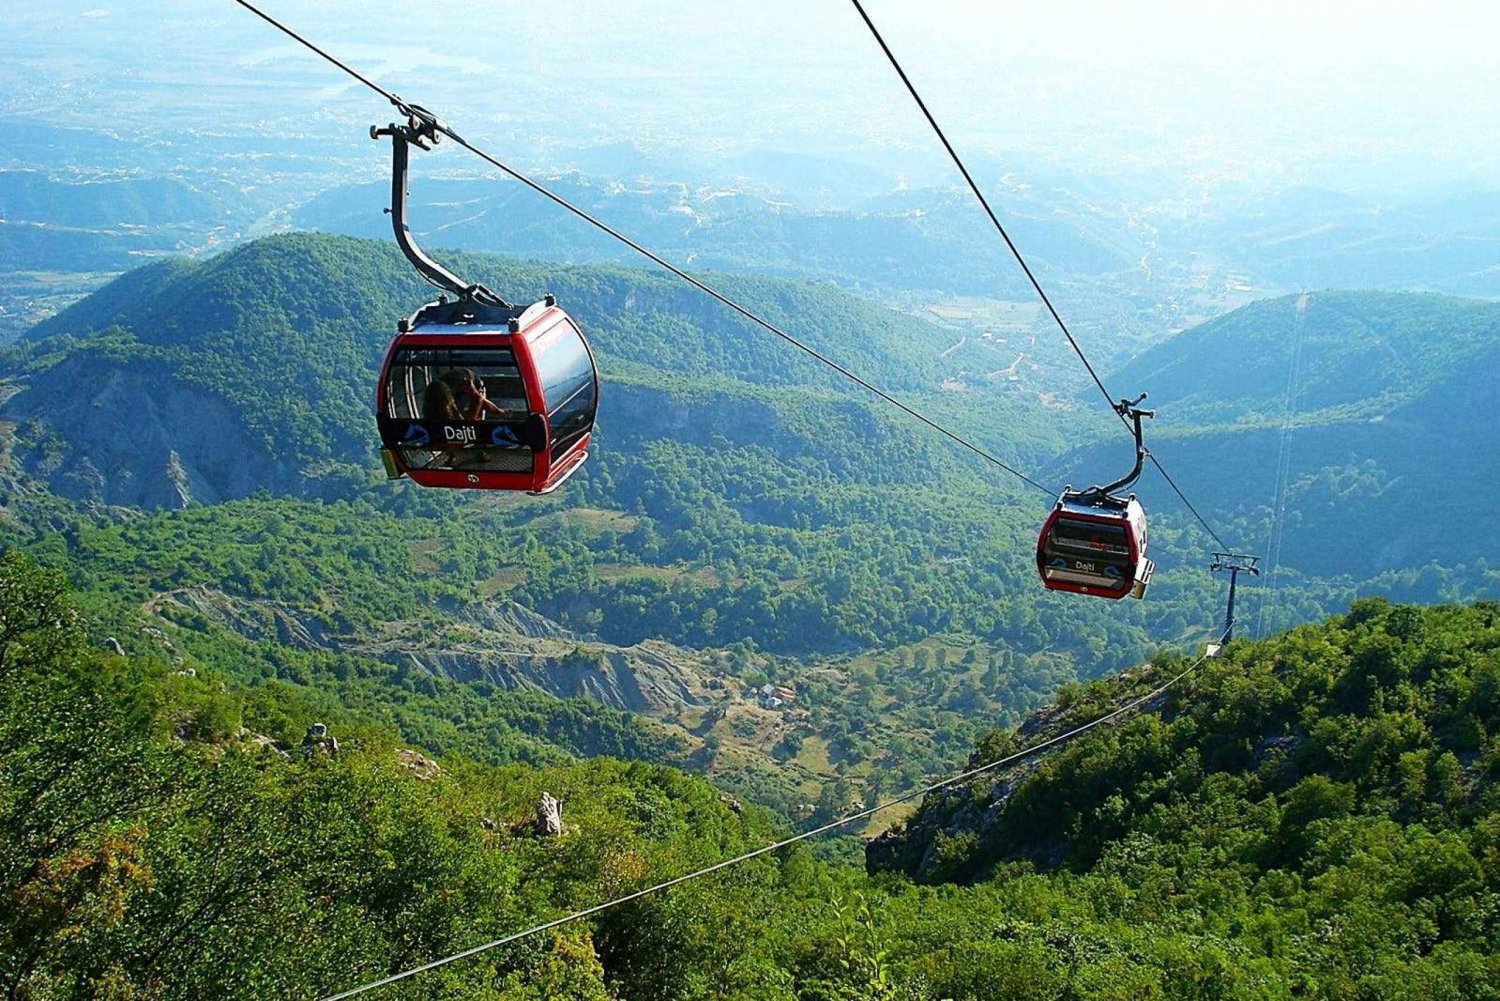 Tirana Walking Tour & Cable Car to Dajti /w ticket included